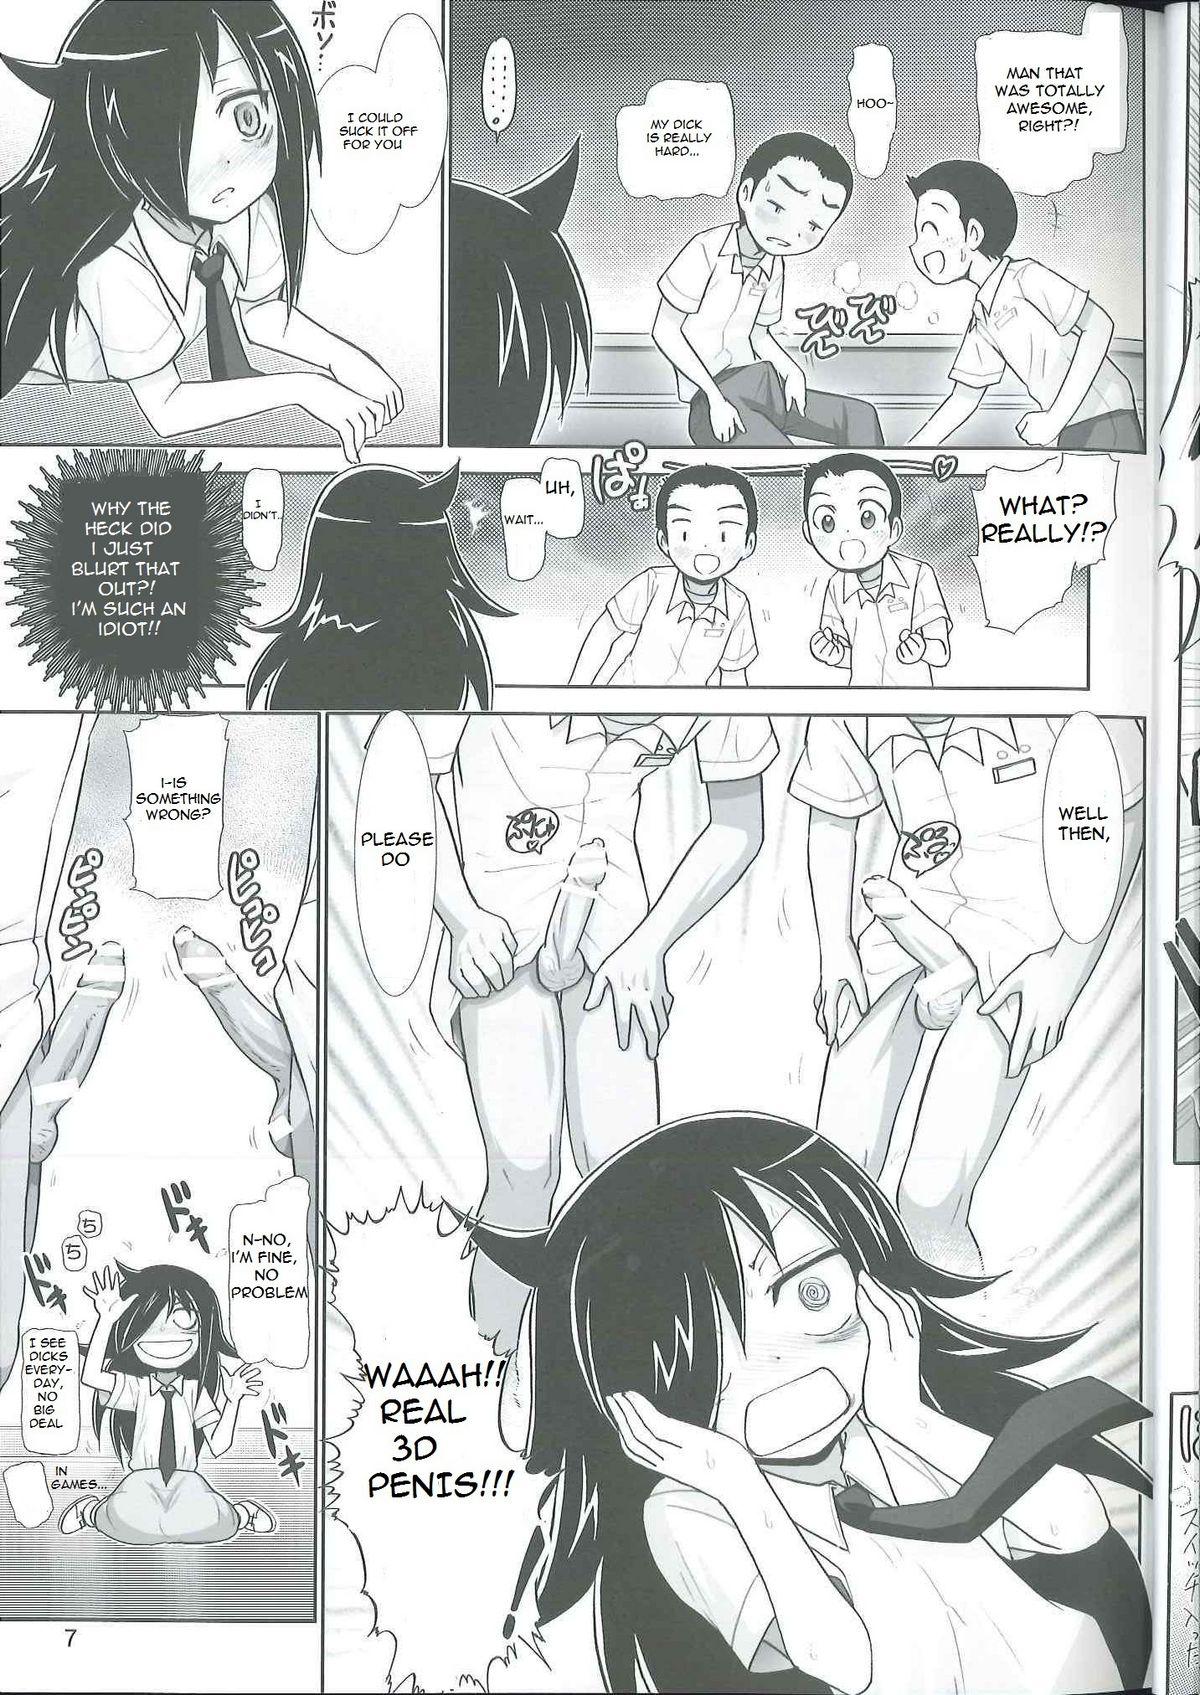 Nut Watashi ga H shite Nani ga Warui! - Its not my fault that im not popular Real Couple - Page 6